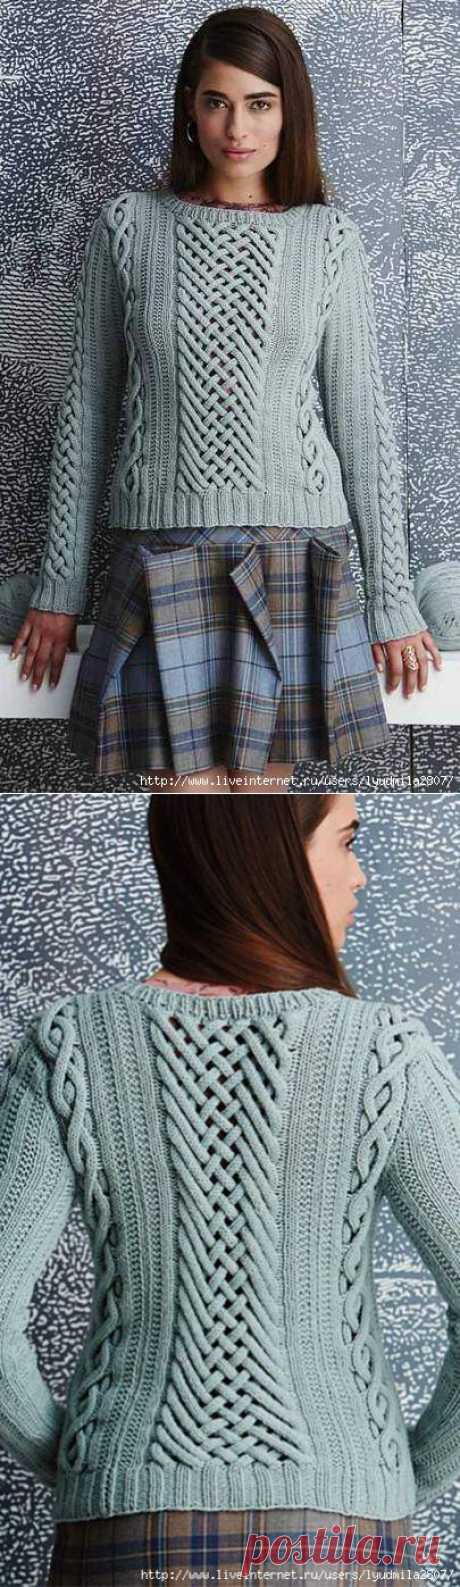 Пуловер Fretwork из Vogue Knitting, Fall 2014. Видео, два описания